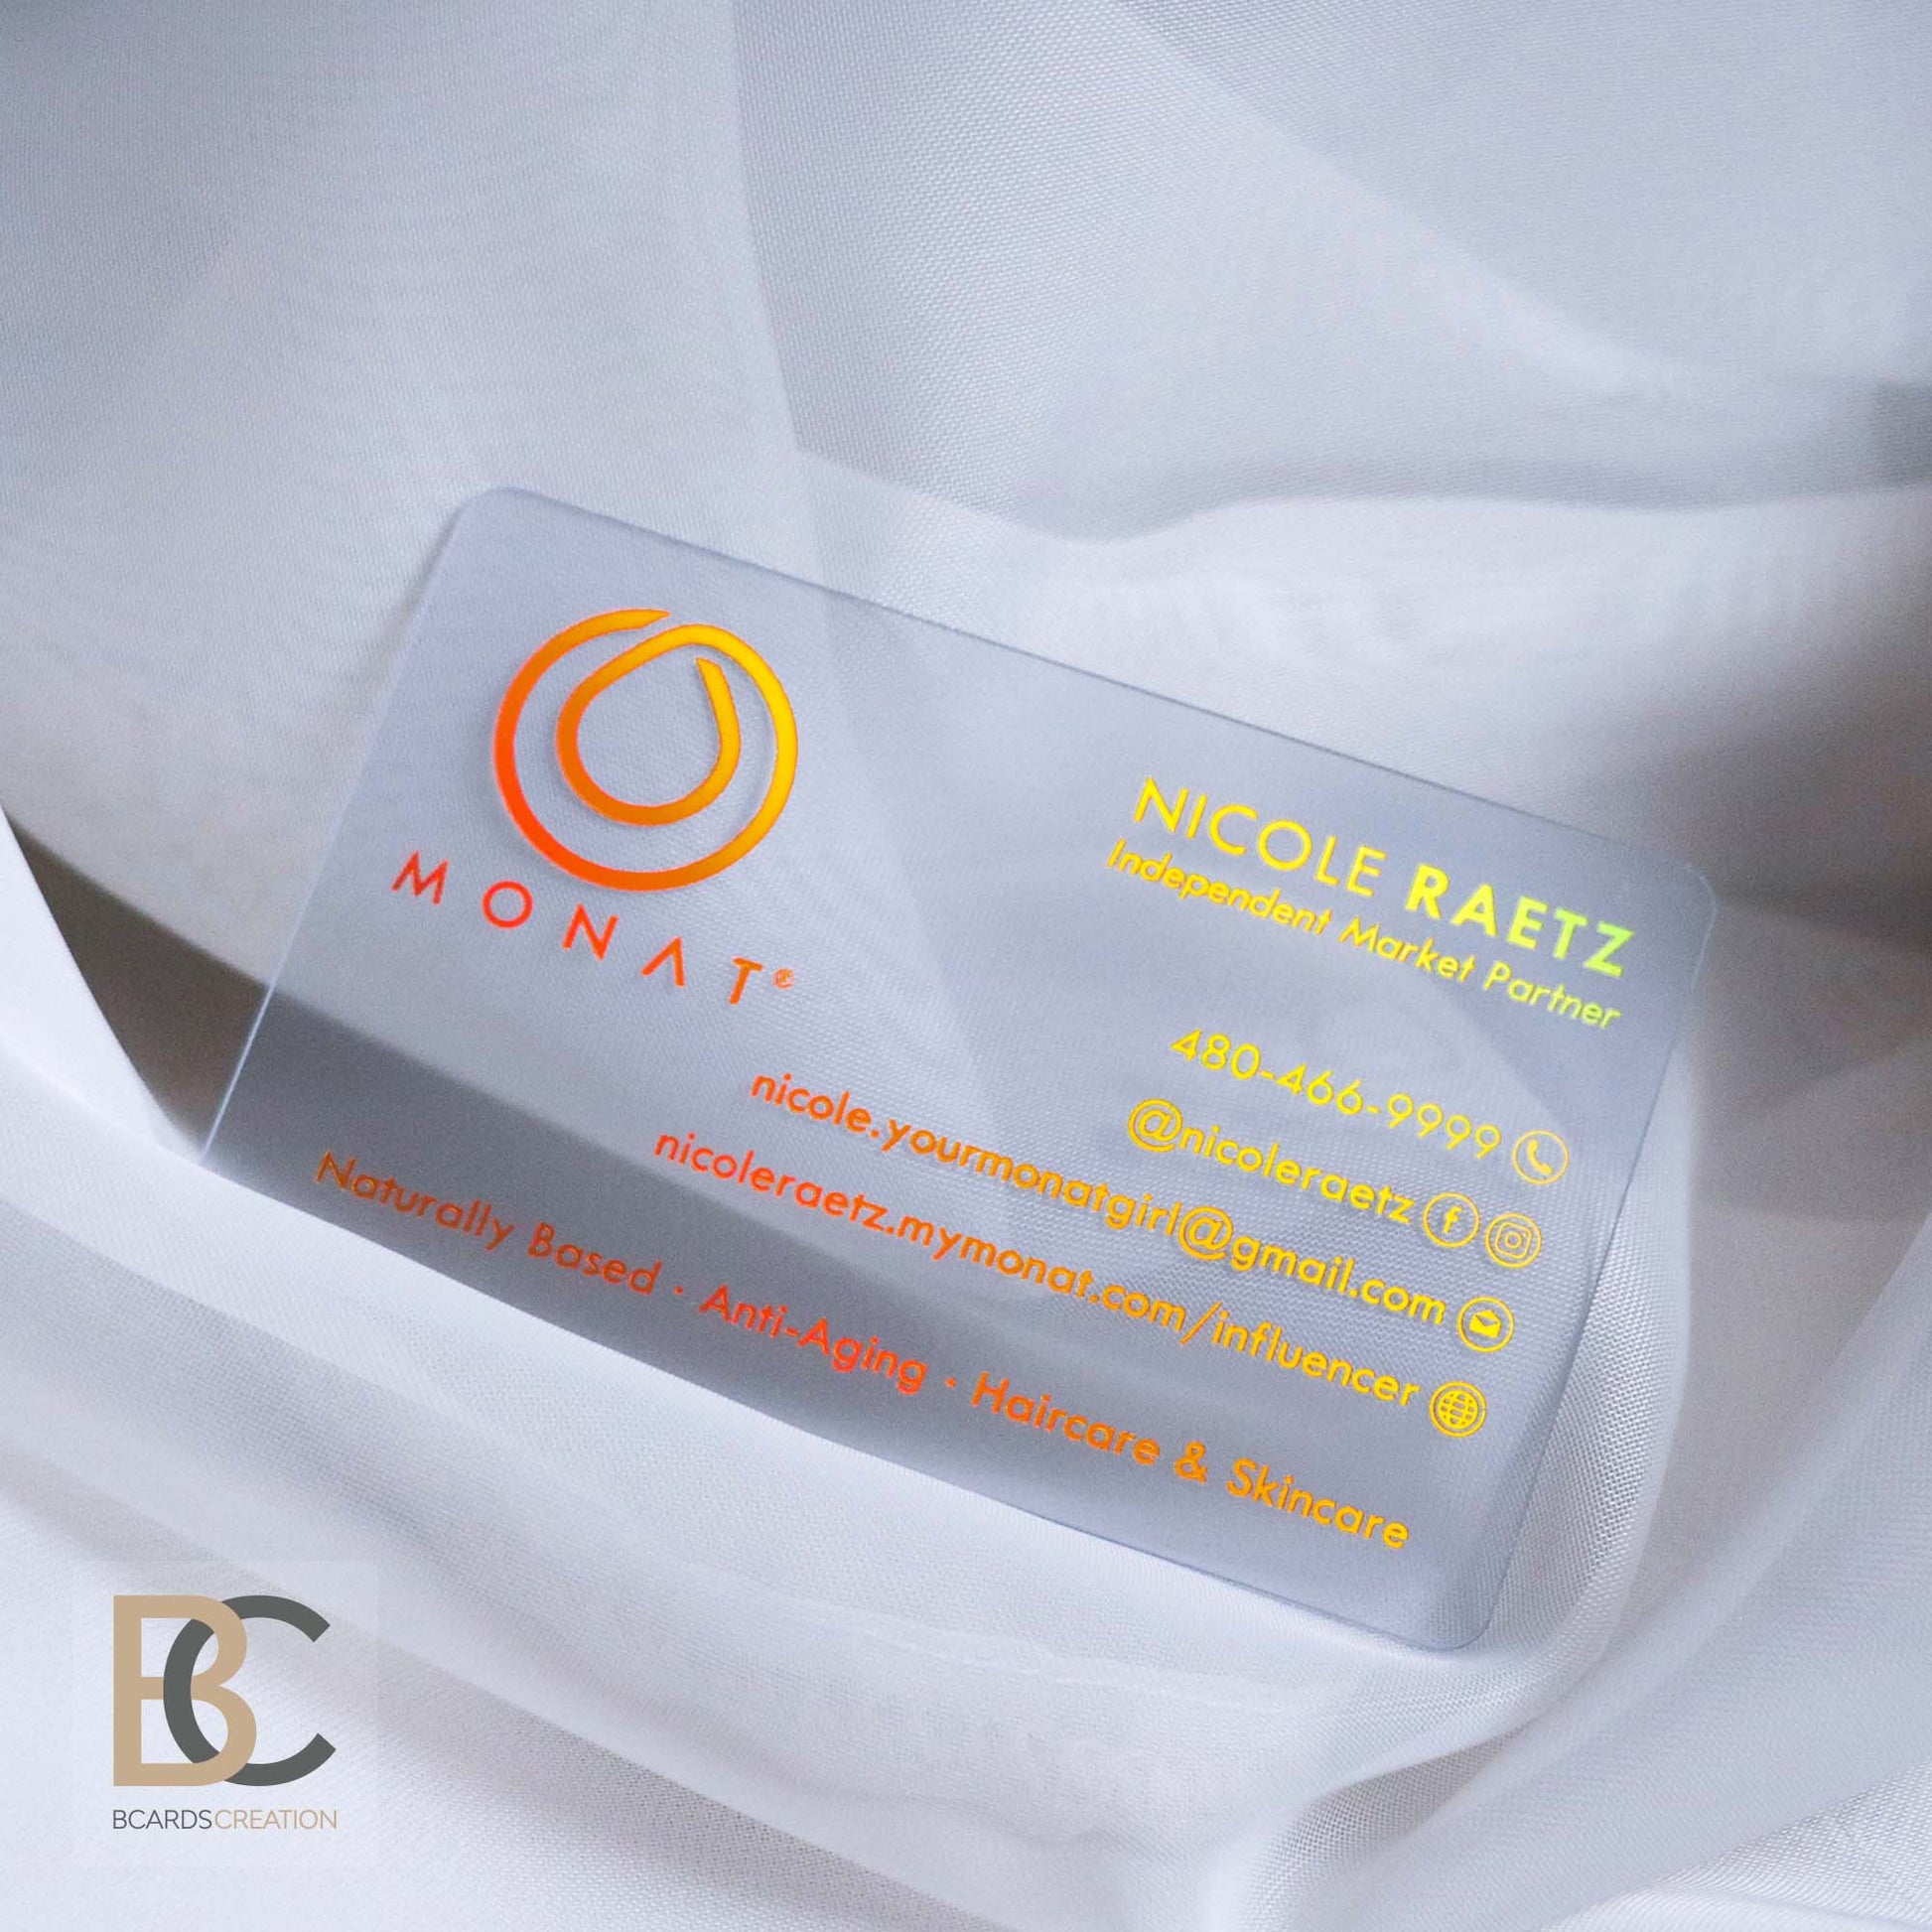 MONAT Business Cards | Foiled Clear Plastic | Holographic, Gold, Neon foils BcardsCreation